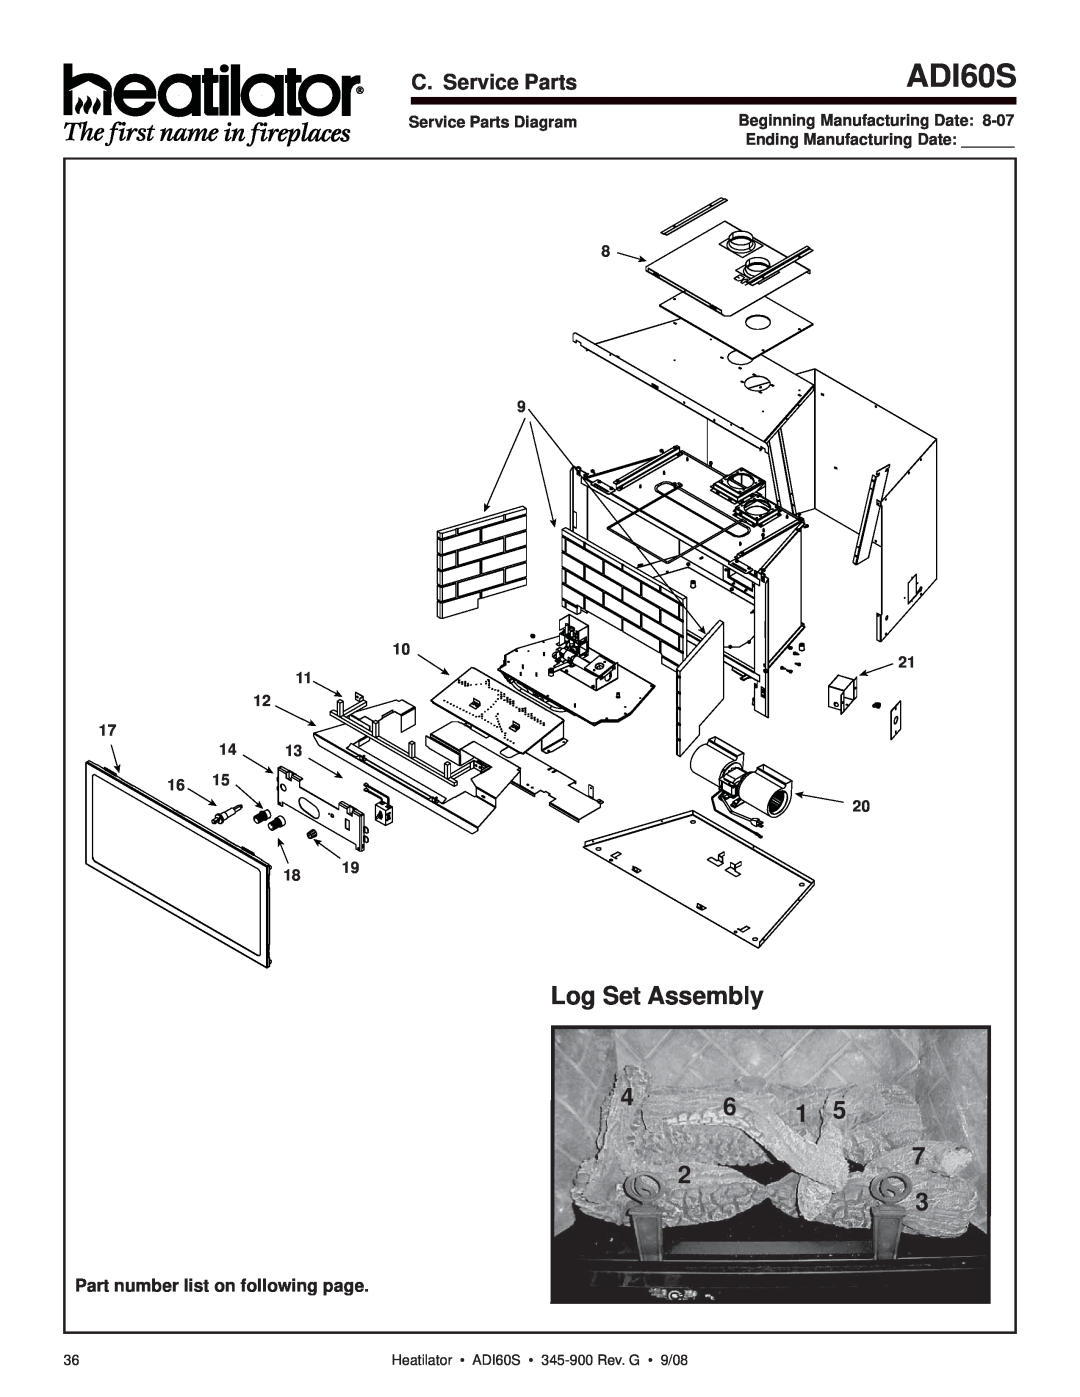 Heatiator ADI60S owner manual Log Set Assembly, C. Service Parts, Beginning Manufacturing Date, Ending Manufacturing Date 